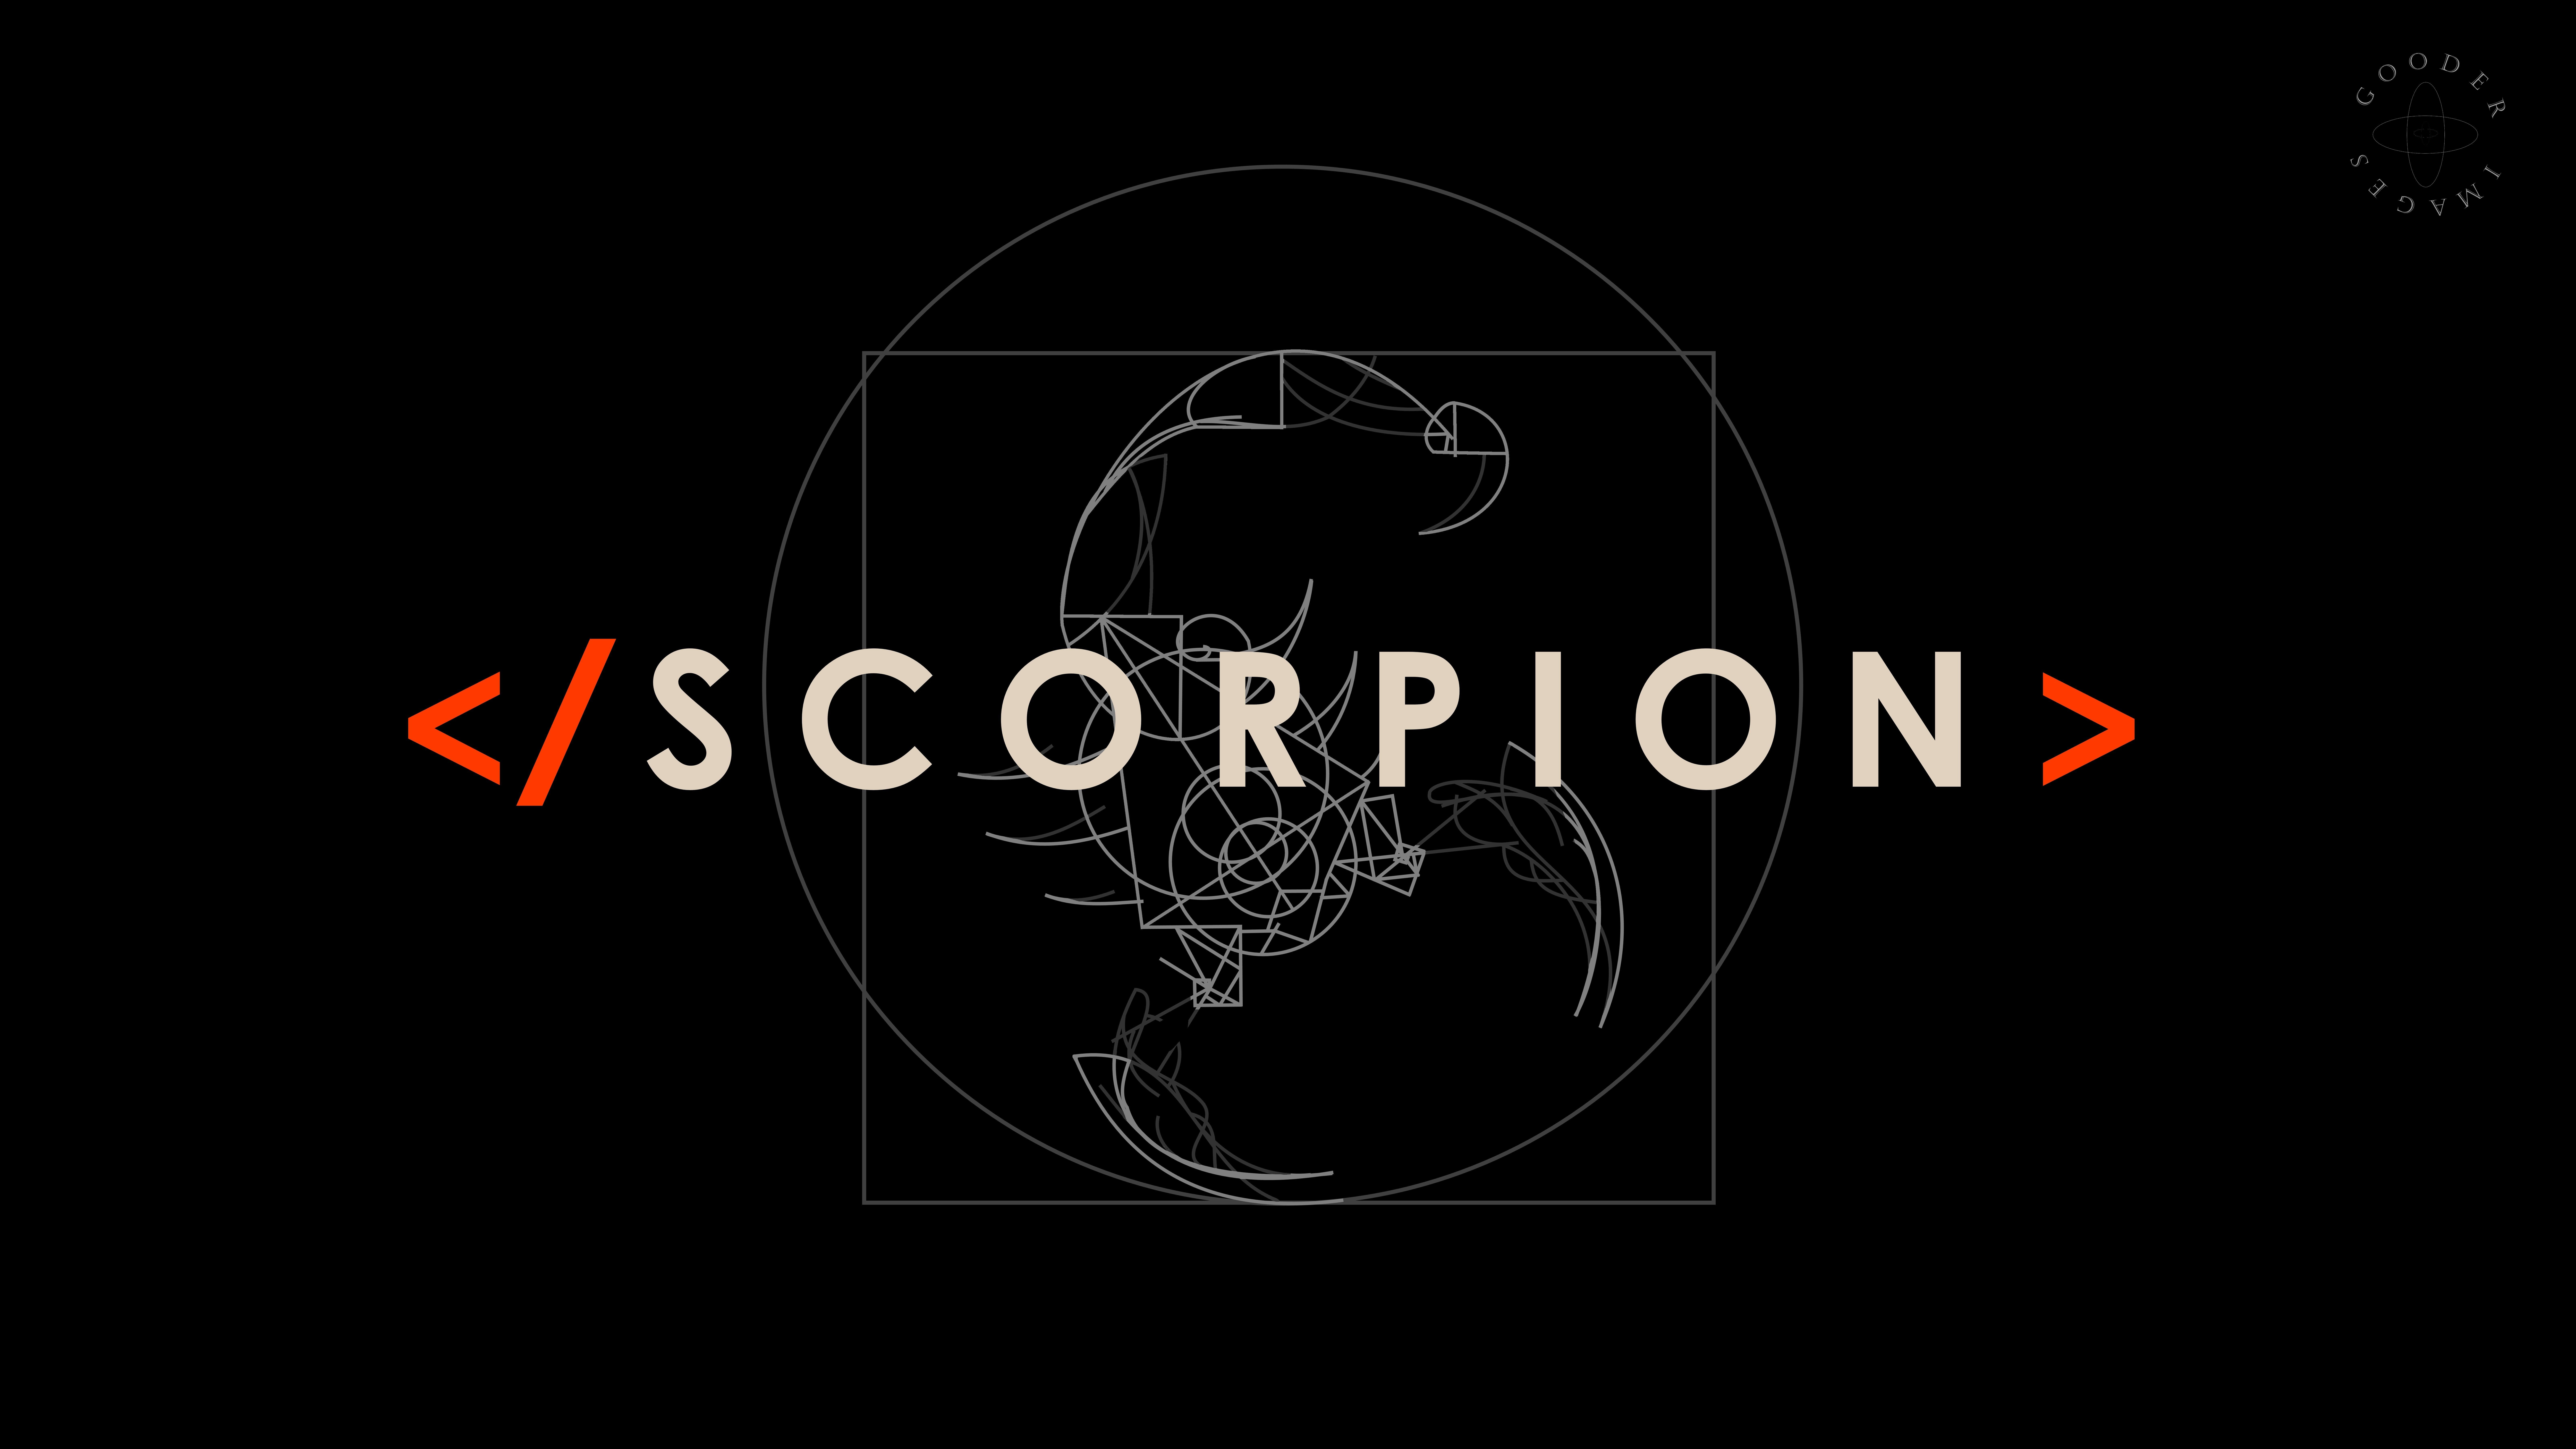 Scorpion Logo - Scorpion TV Show Logo Wallpaper - Imgur